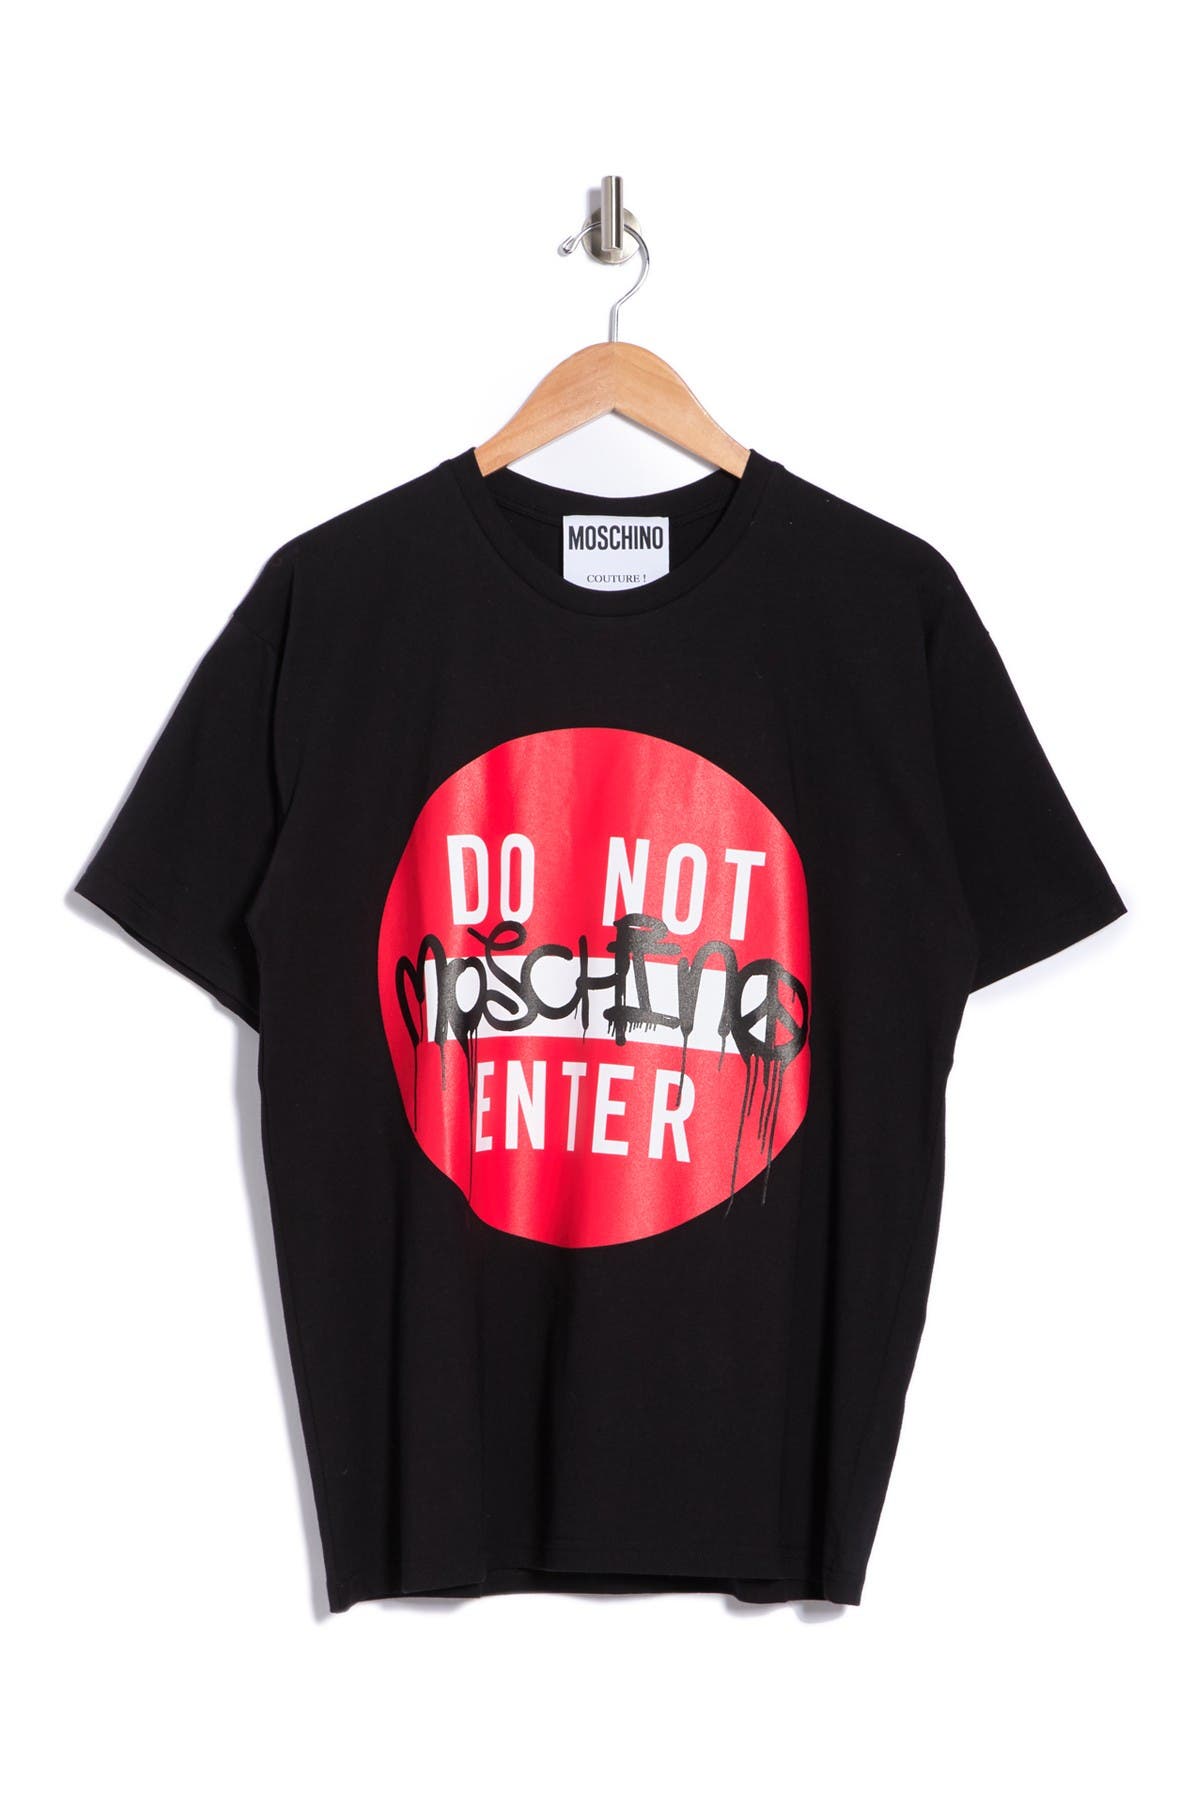 do not enter moschino shirt